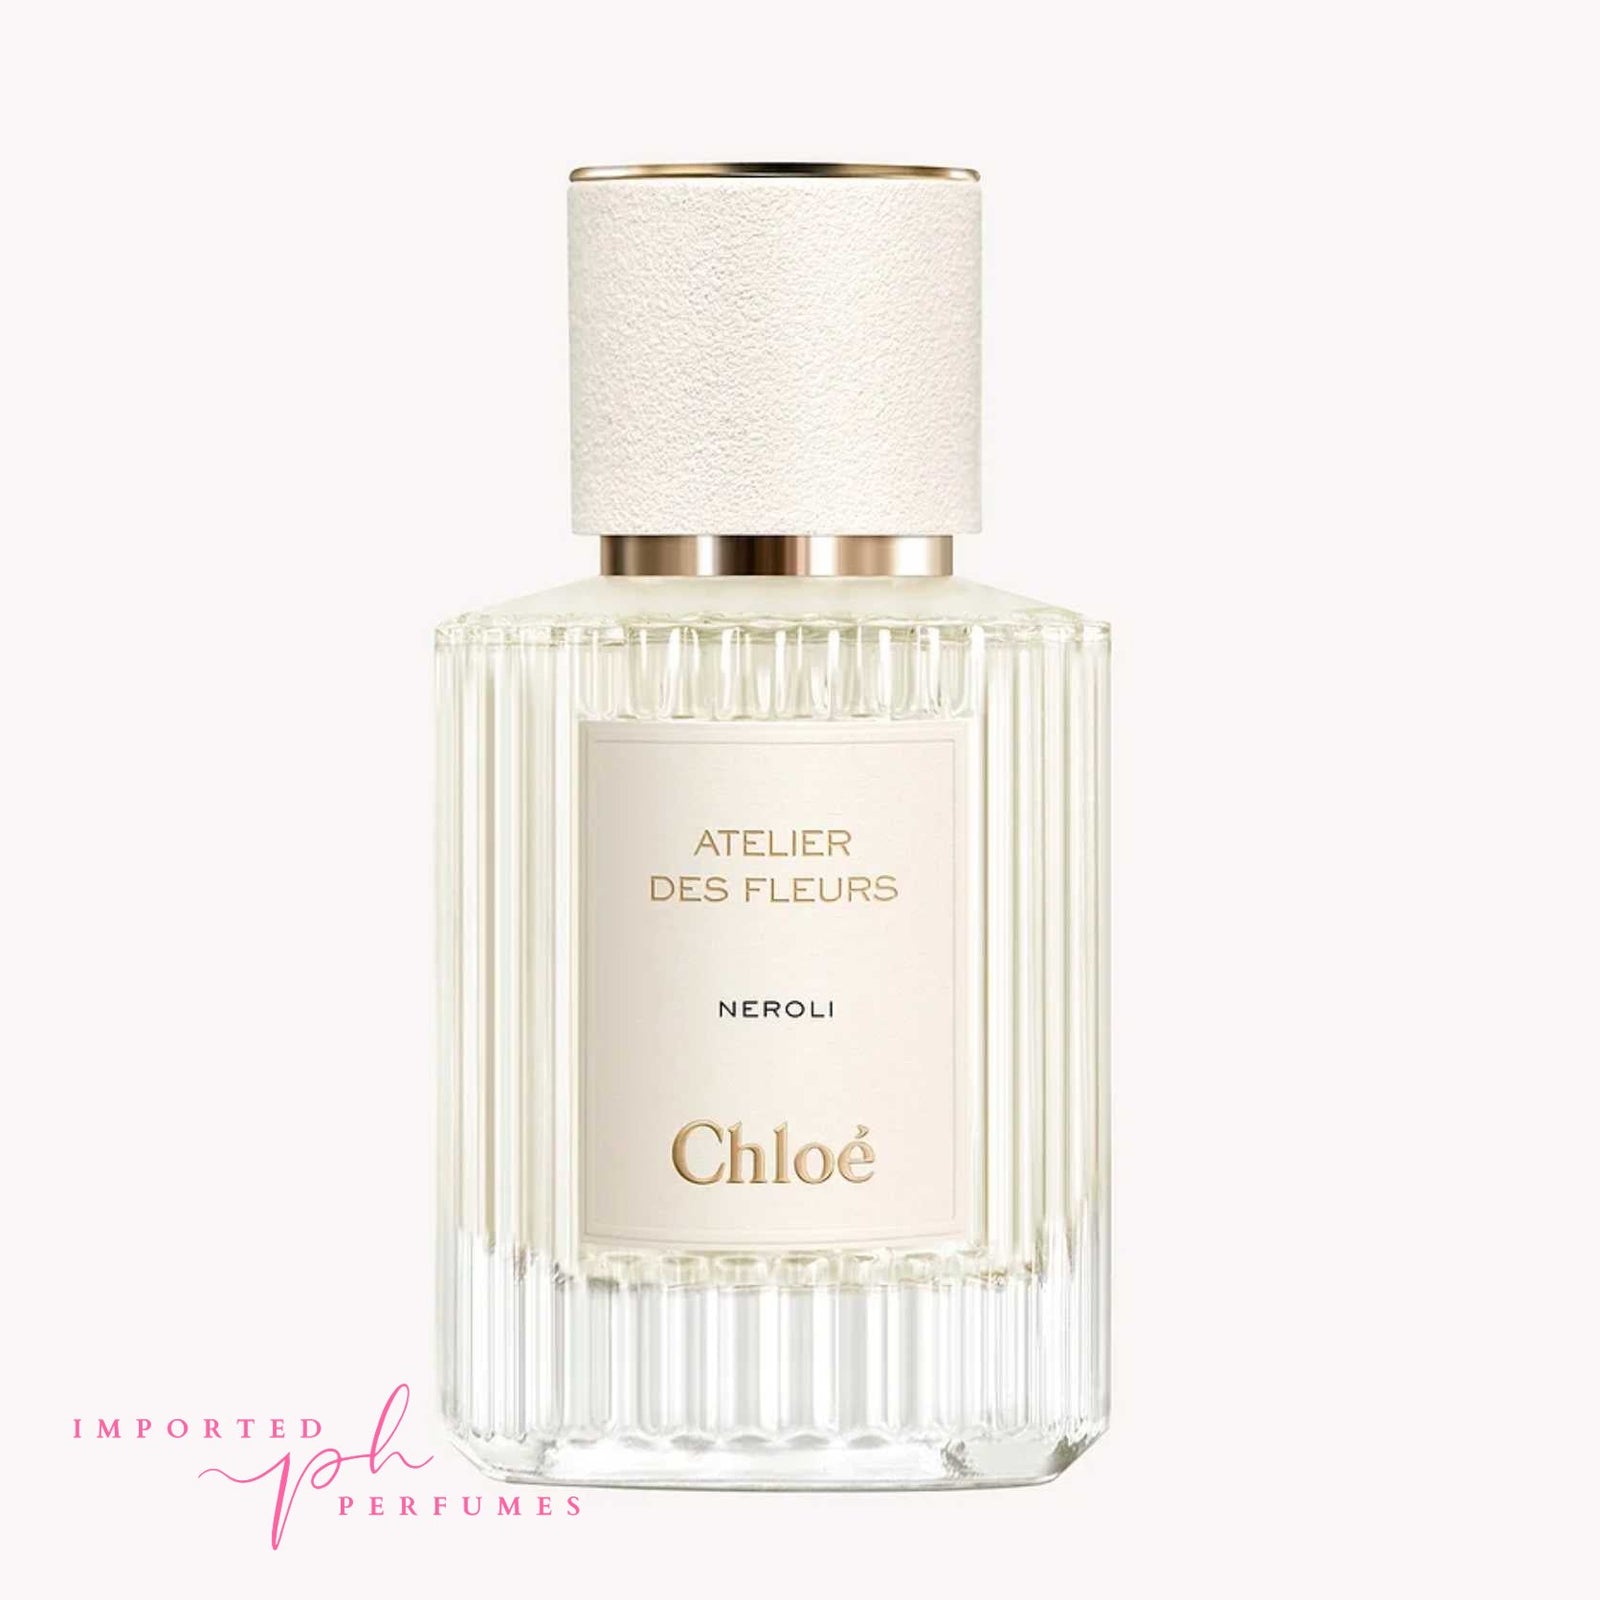 Chloe Atelier Des Fleurs Neroli 50ml EDP For Women Imported Perfumes & Beauty Store